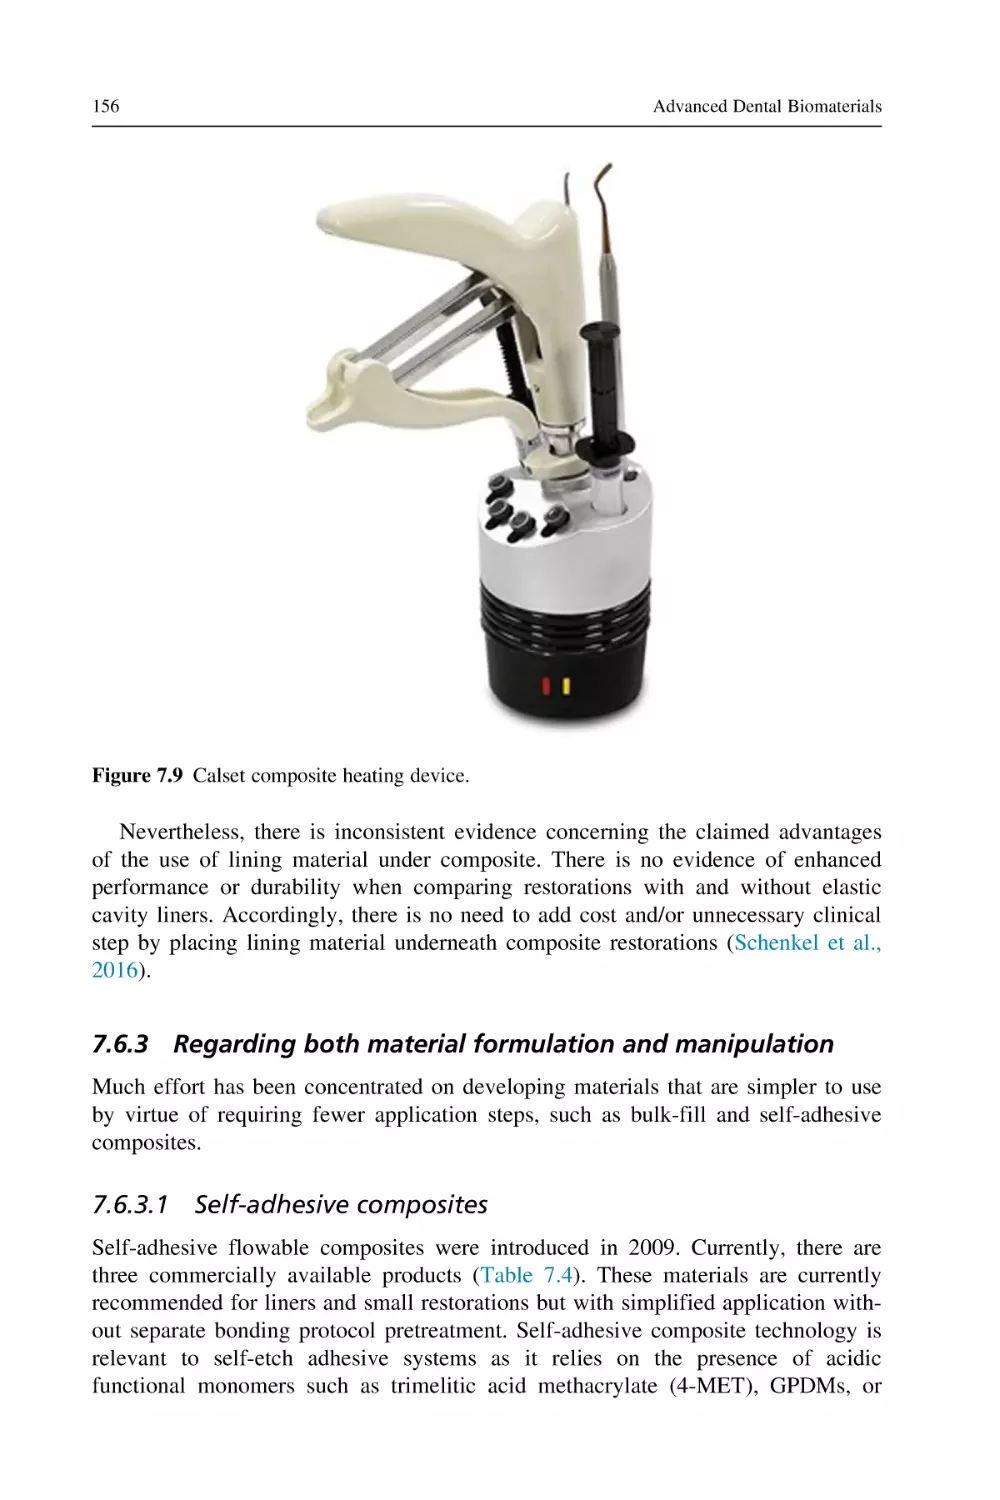 7.6.3 Regarding both material formulation and manipulation
7.6.3.1 Self-adhesive composites